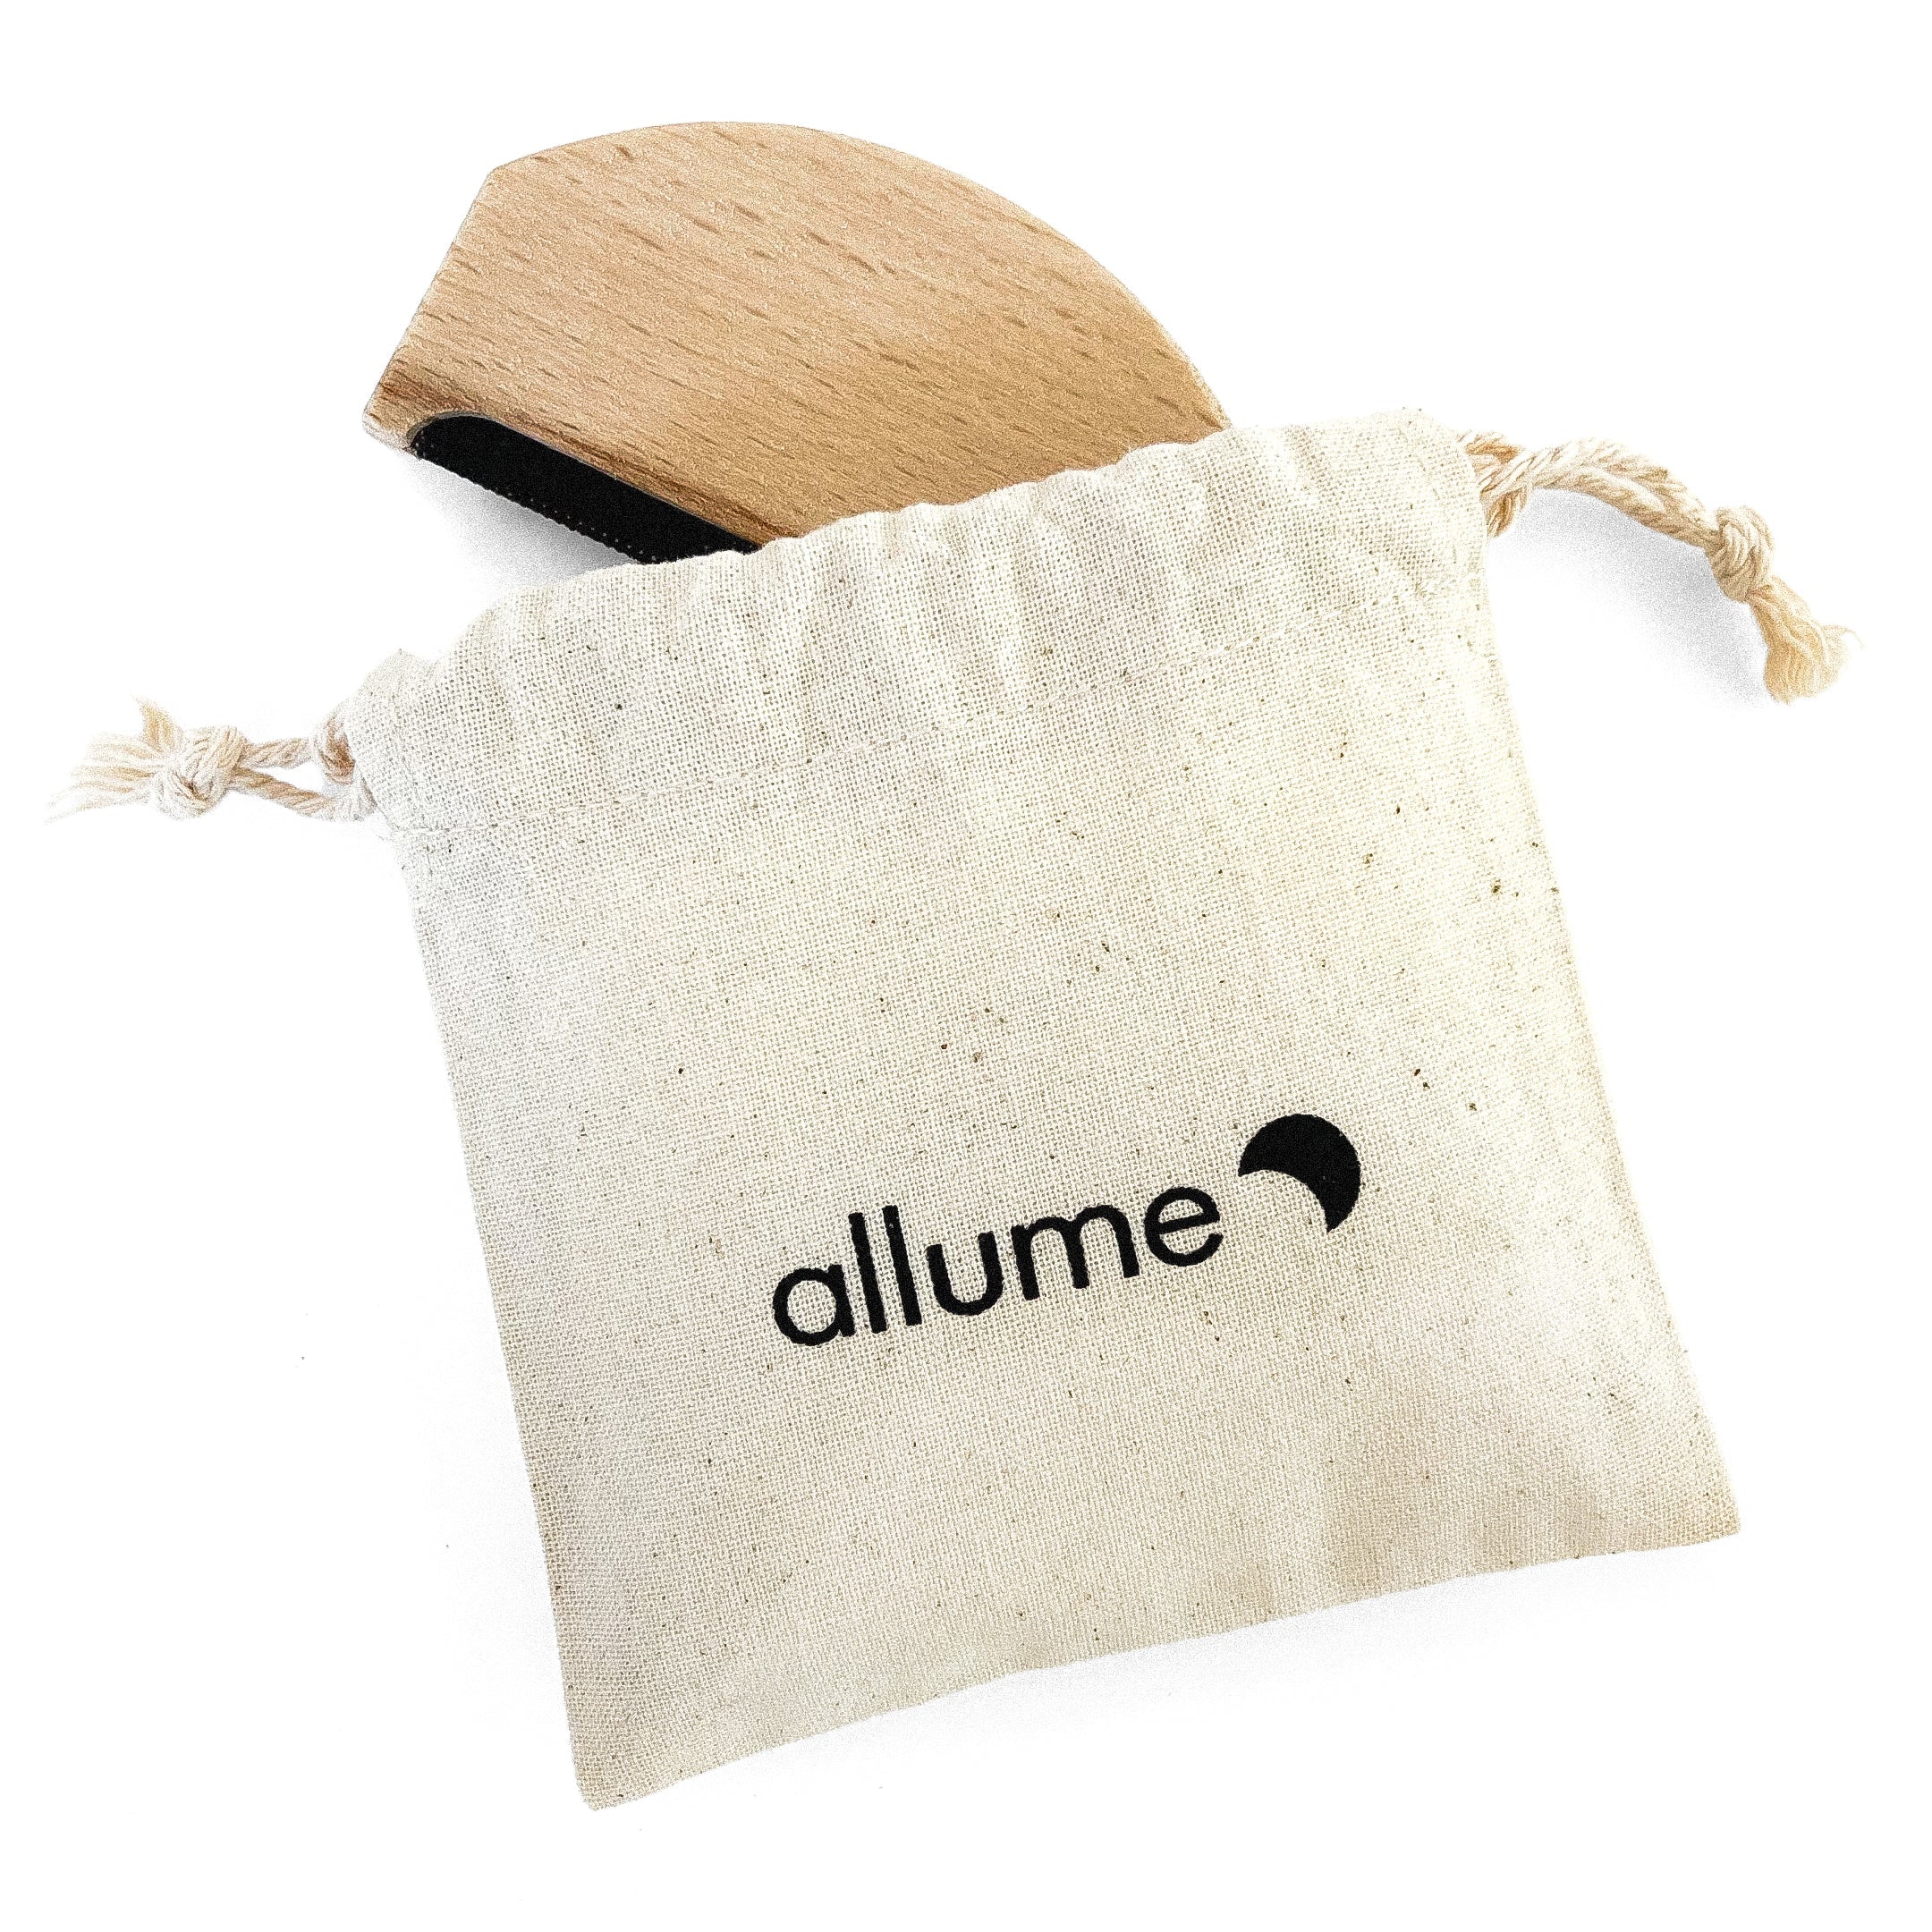 allume  Nurture Your Cashmere with Allume's Fine Wool Pine Wood Comb